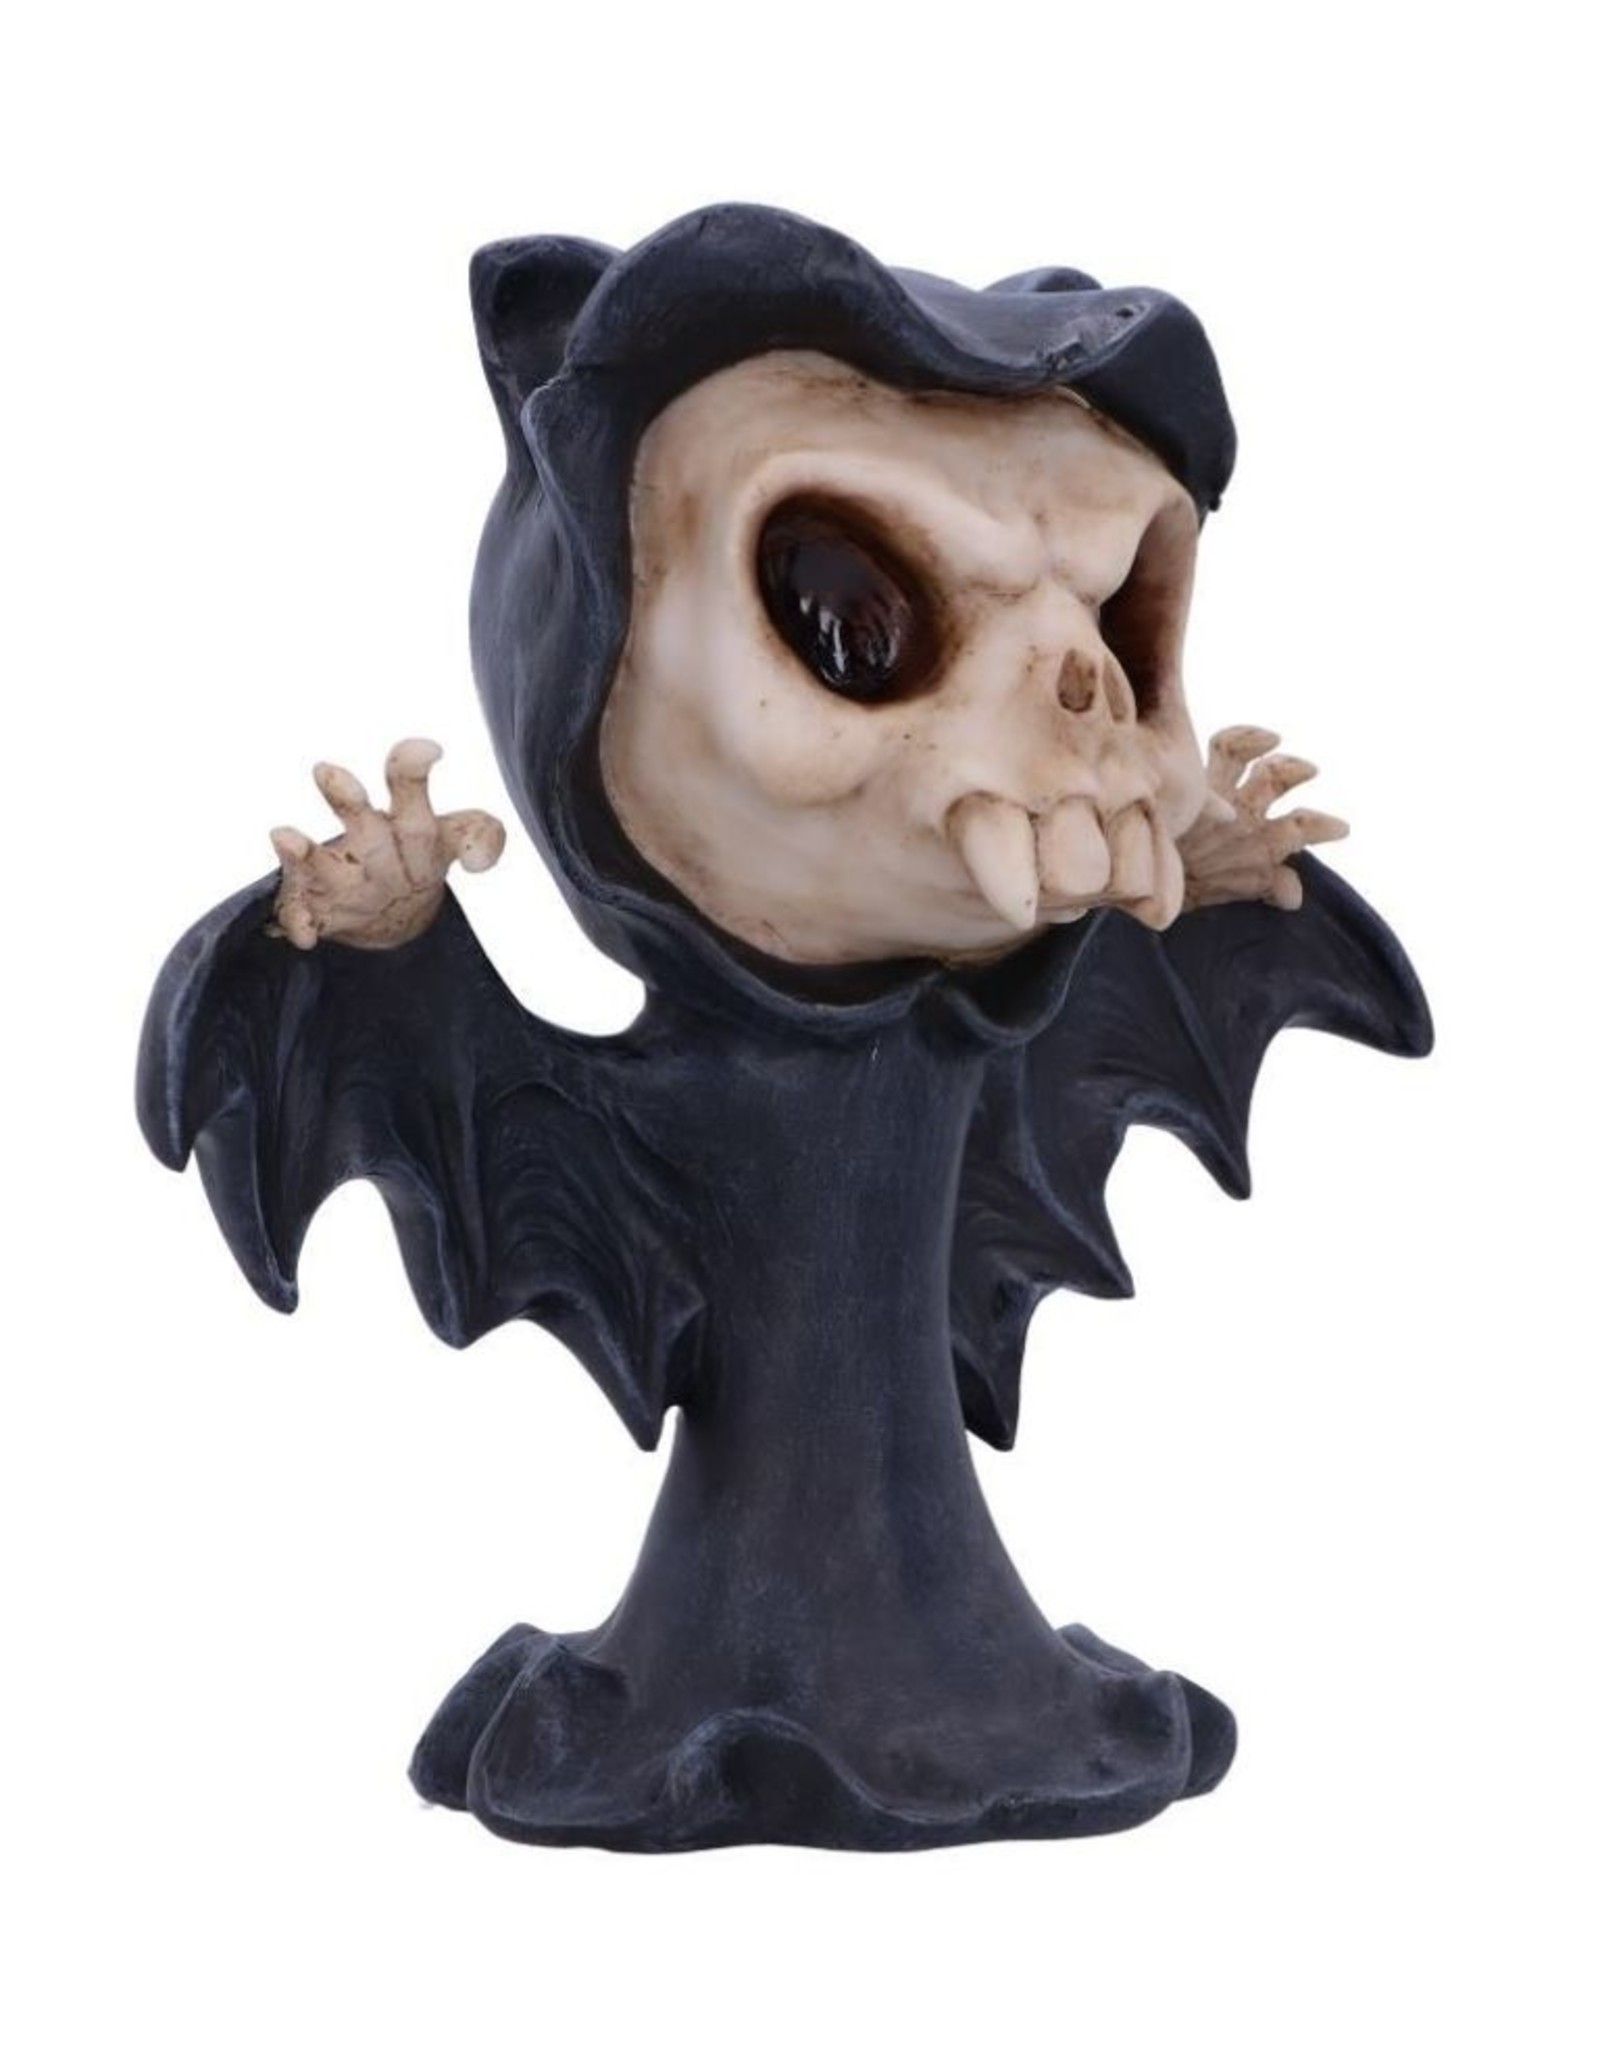 Alator Giftware & Lifestyle - Vamp Bat Reaper Figurine 16.5cm